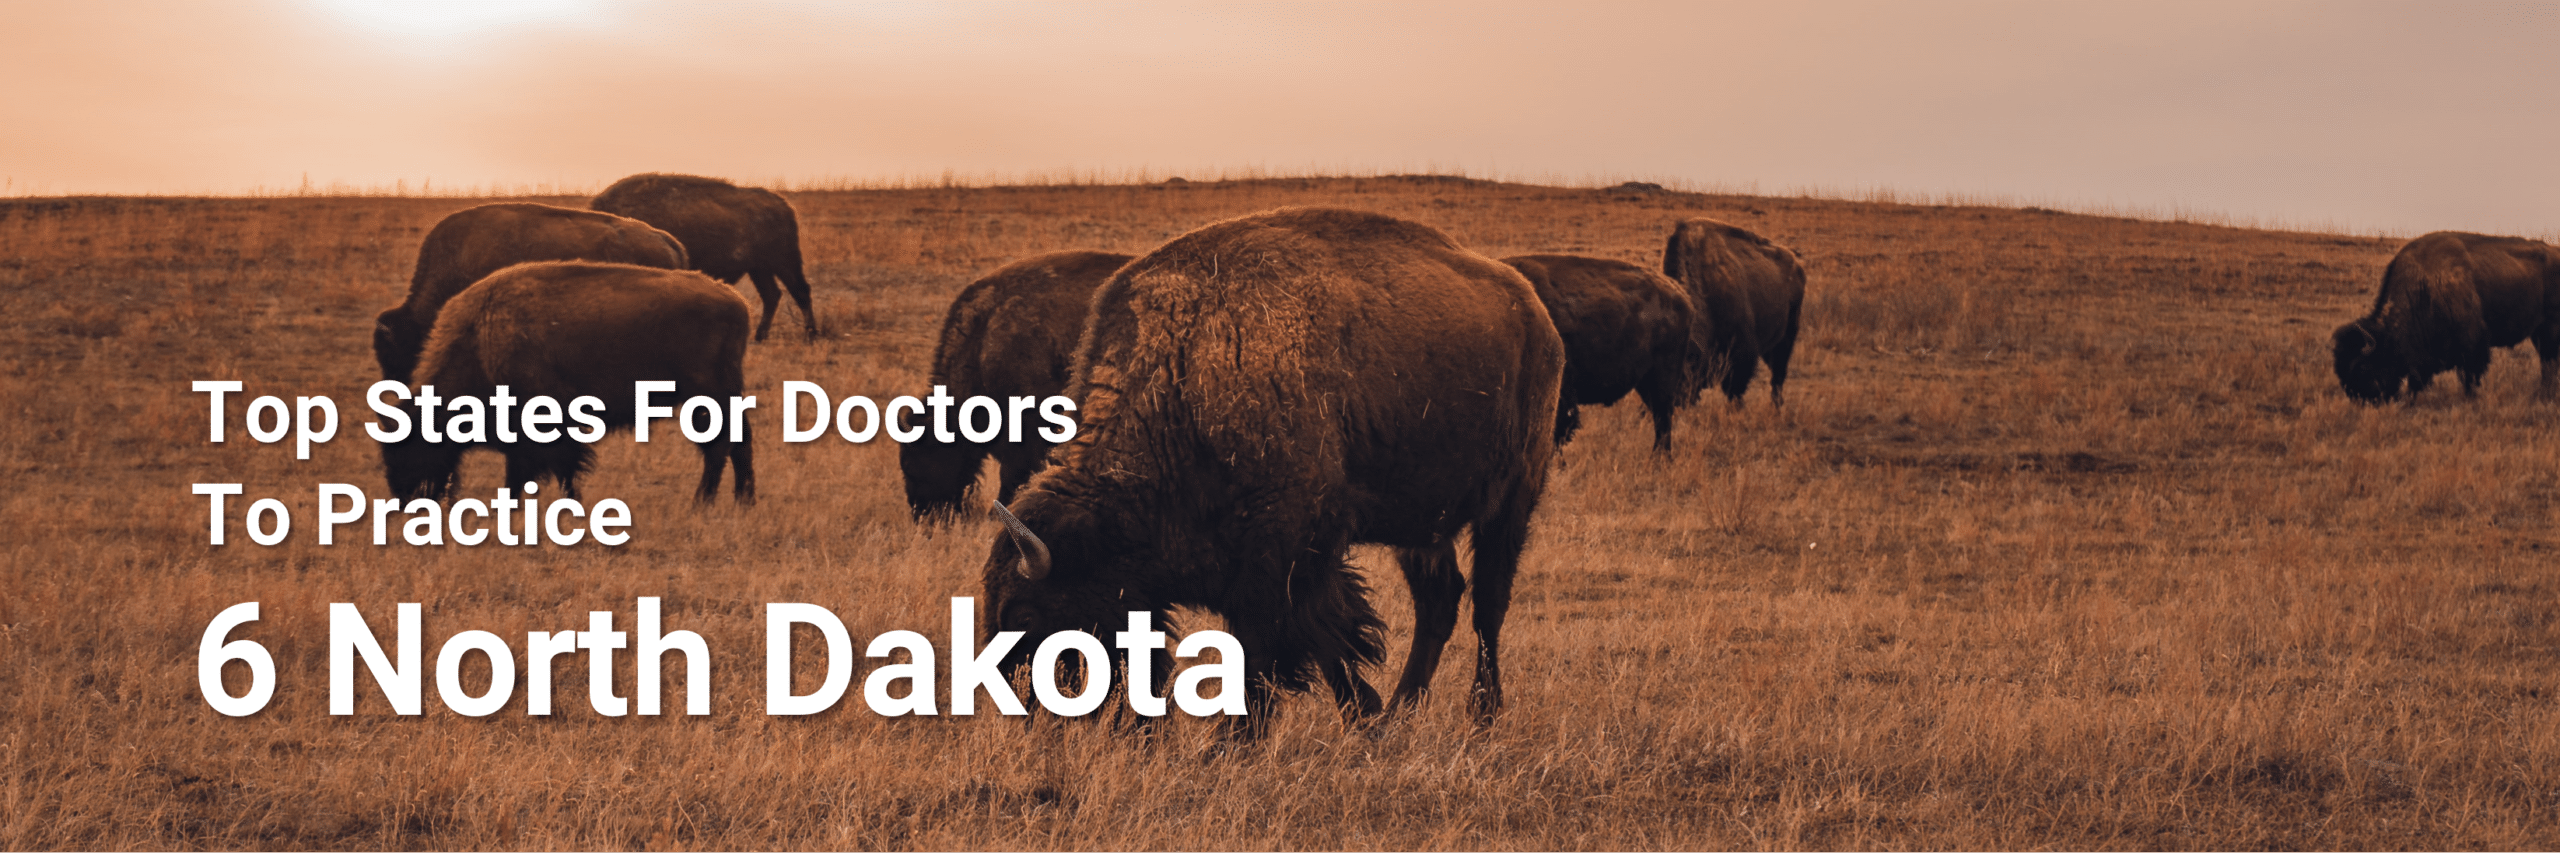 Top States for Doctors to Practice 6 North Dakota